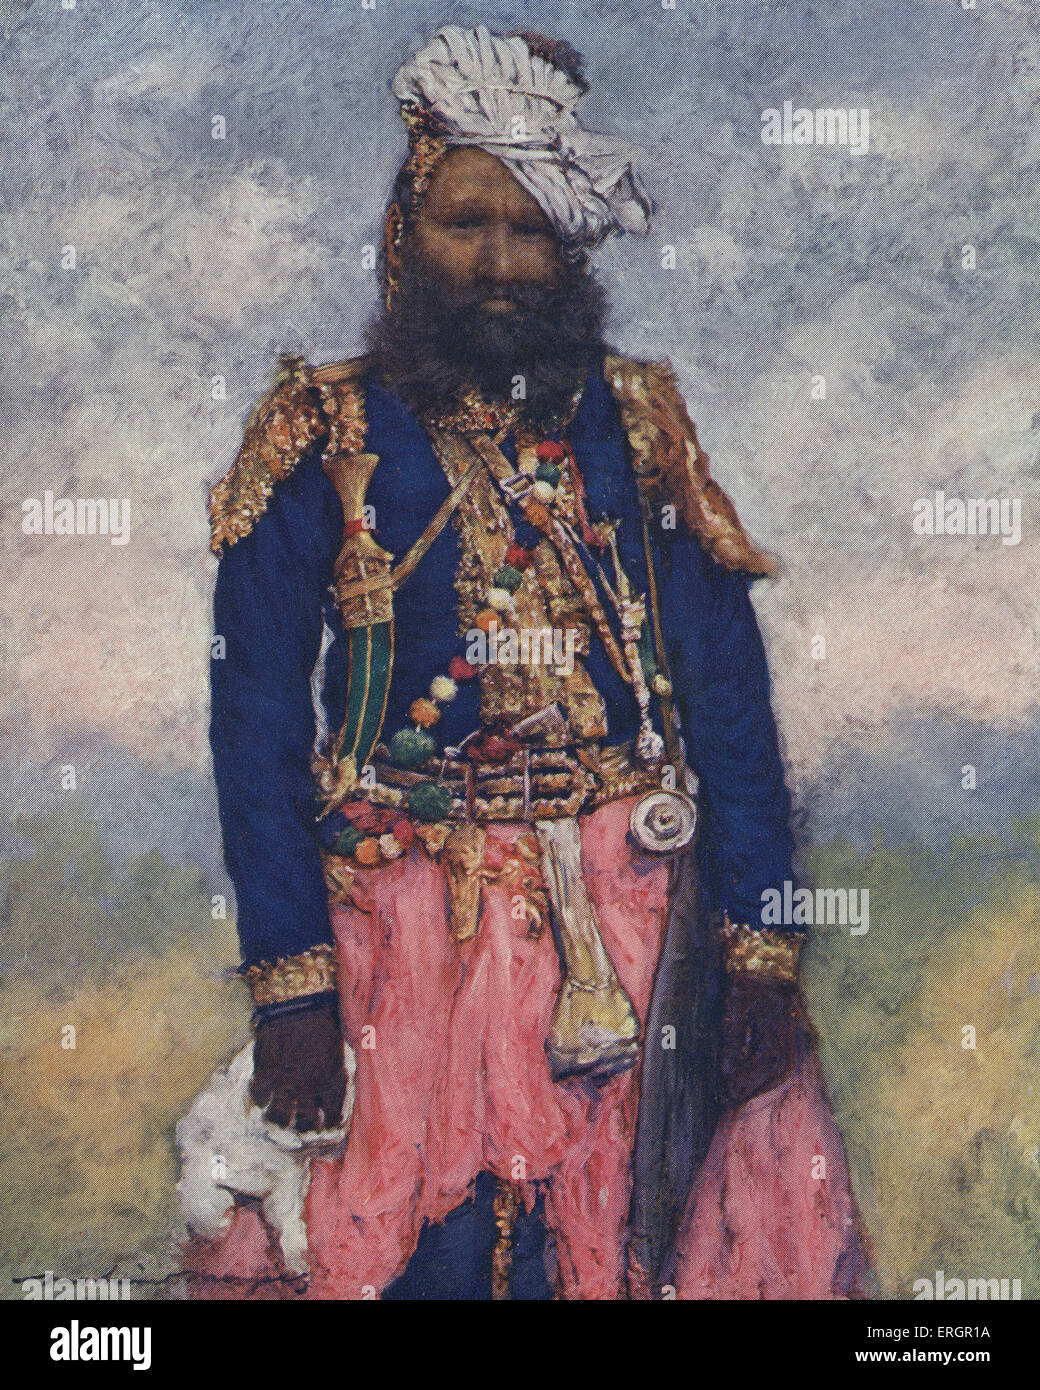 "La retenue", un soldat de Rajgarh, un État princier de l'Inde pendant le Raj britannique. Après l'illustration par Mortimer Banque D'Images